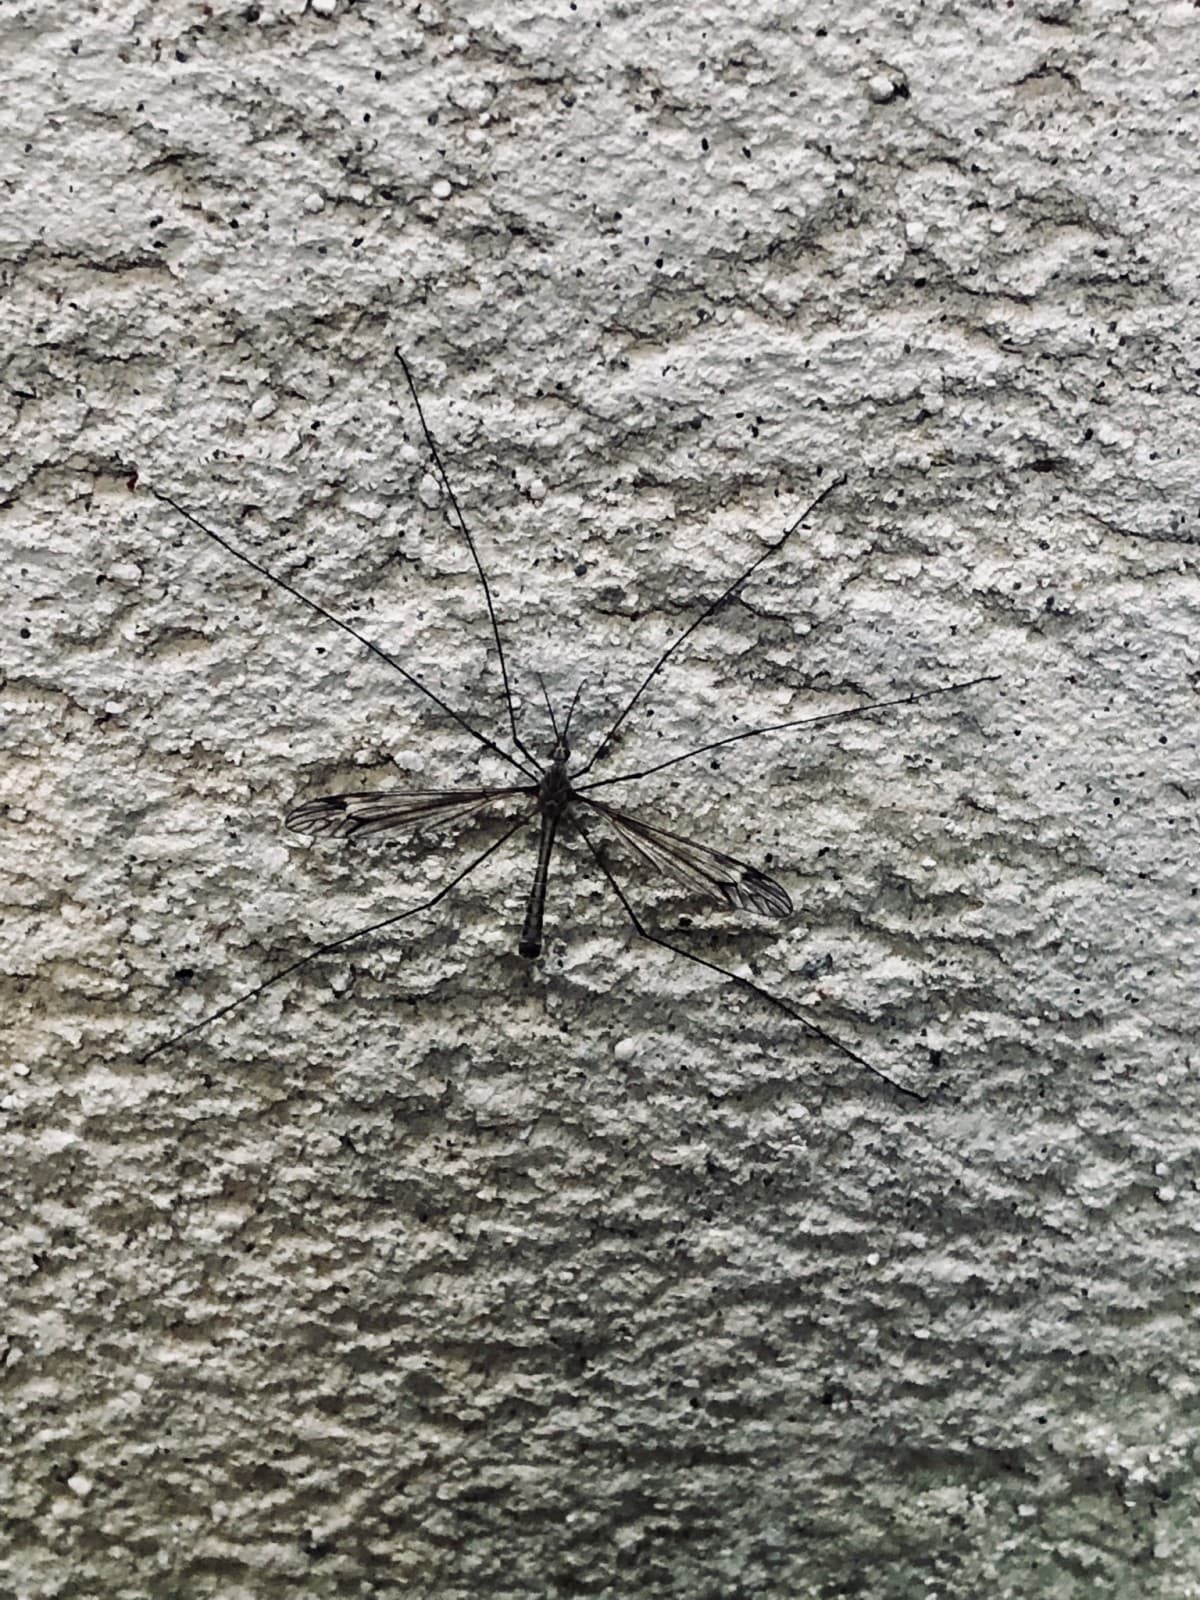 Questa “zanzara” è un alien ?